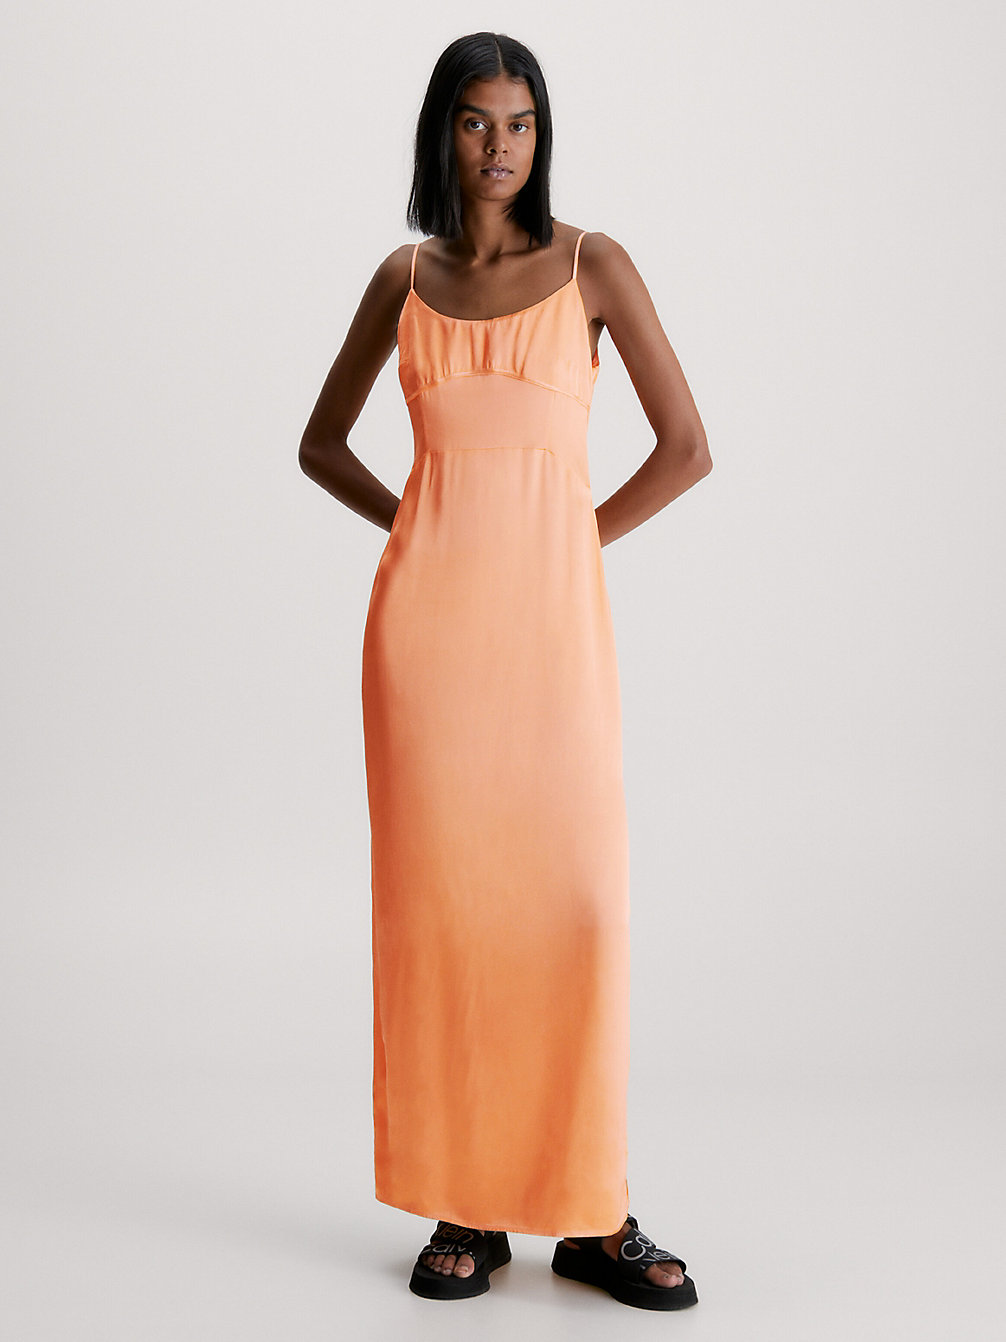 CRUSHED ORANGE Satin Maxi Slip Dress undefined women Calvin Klein